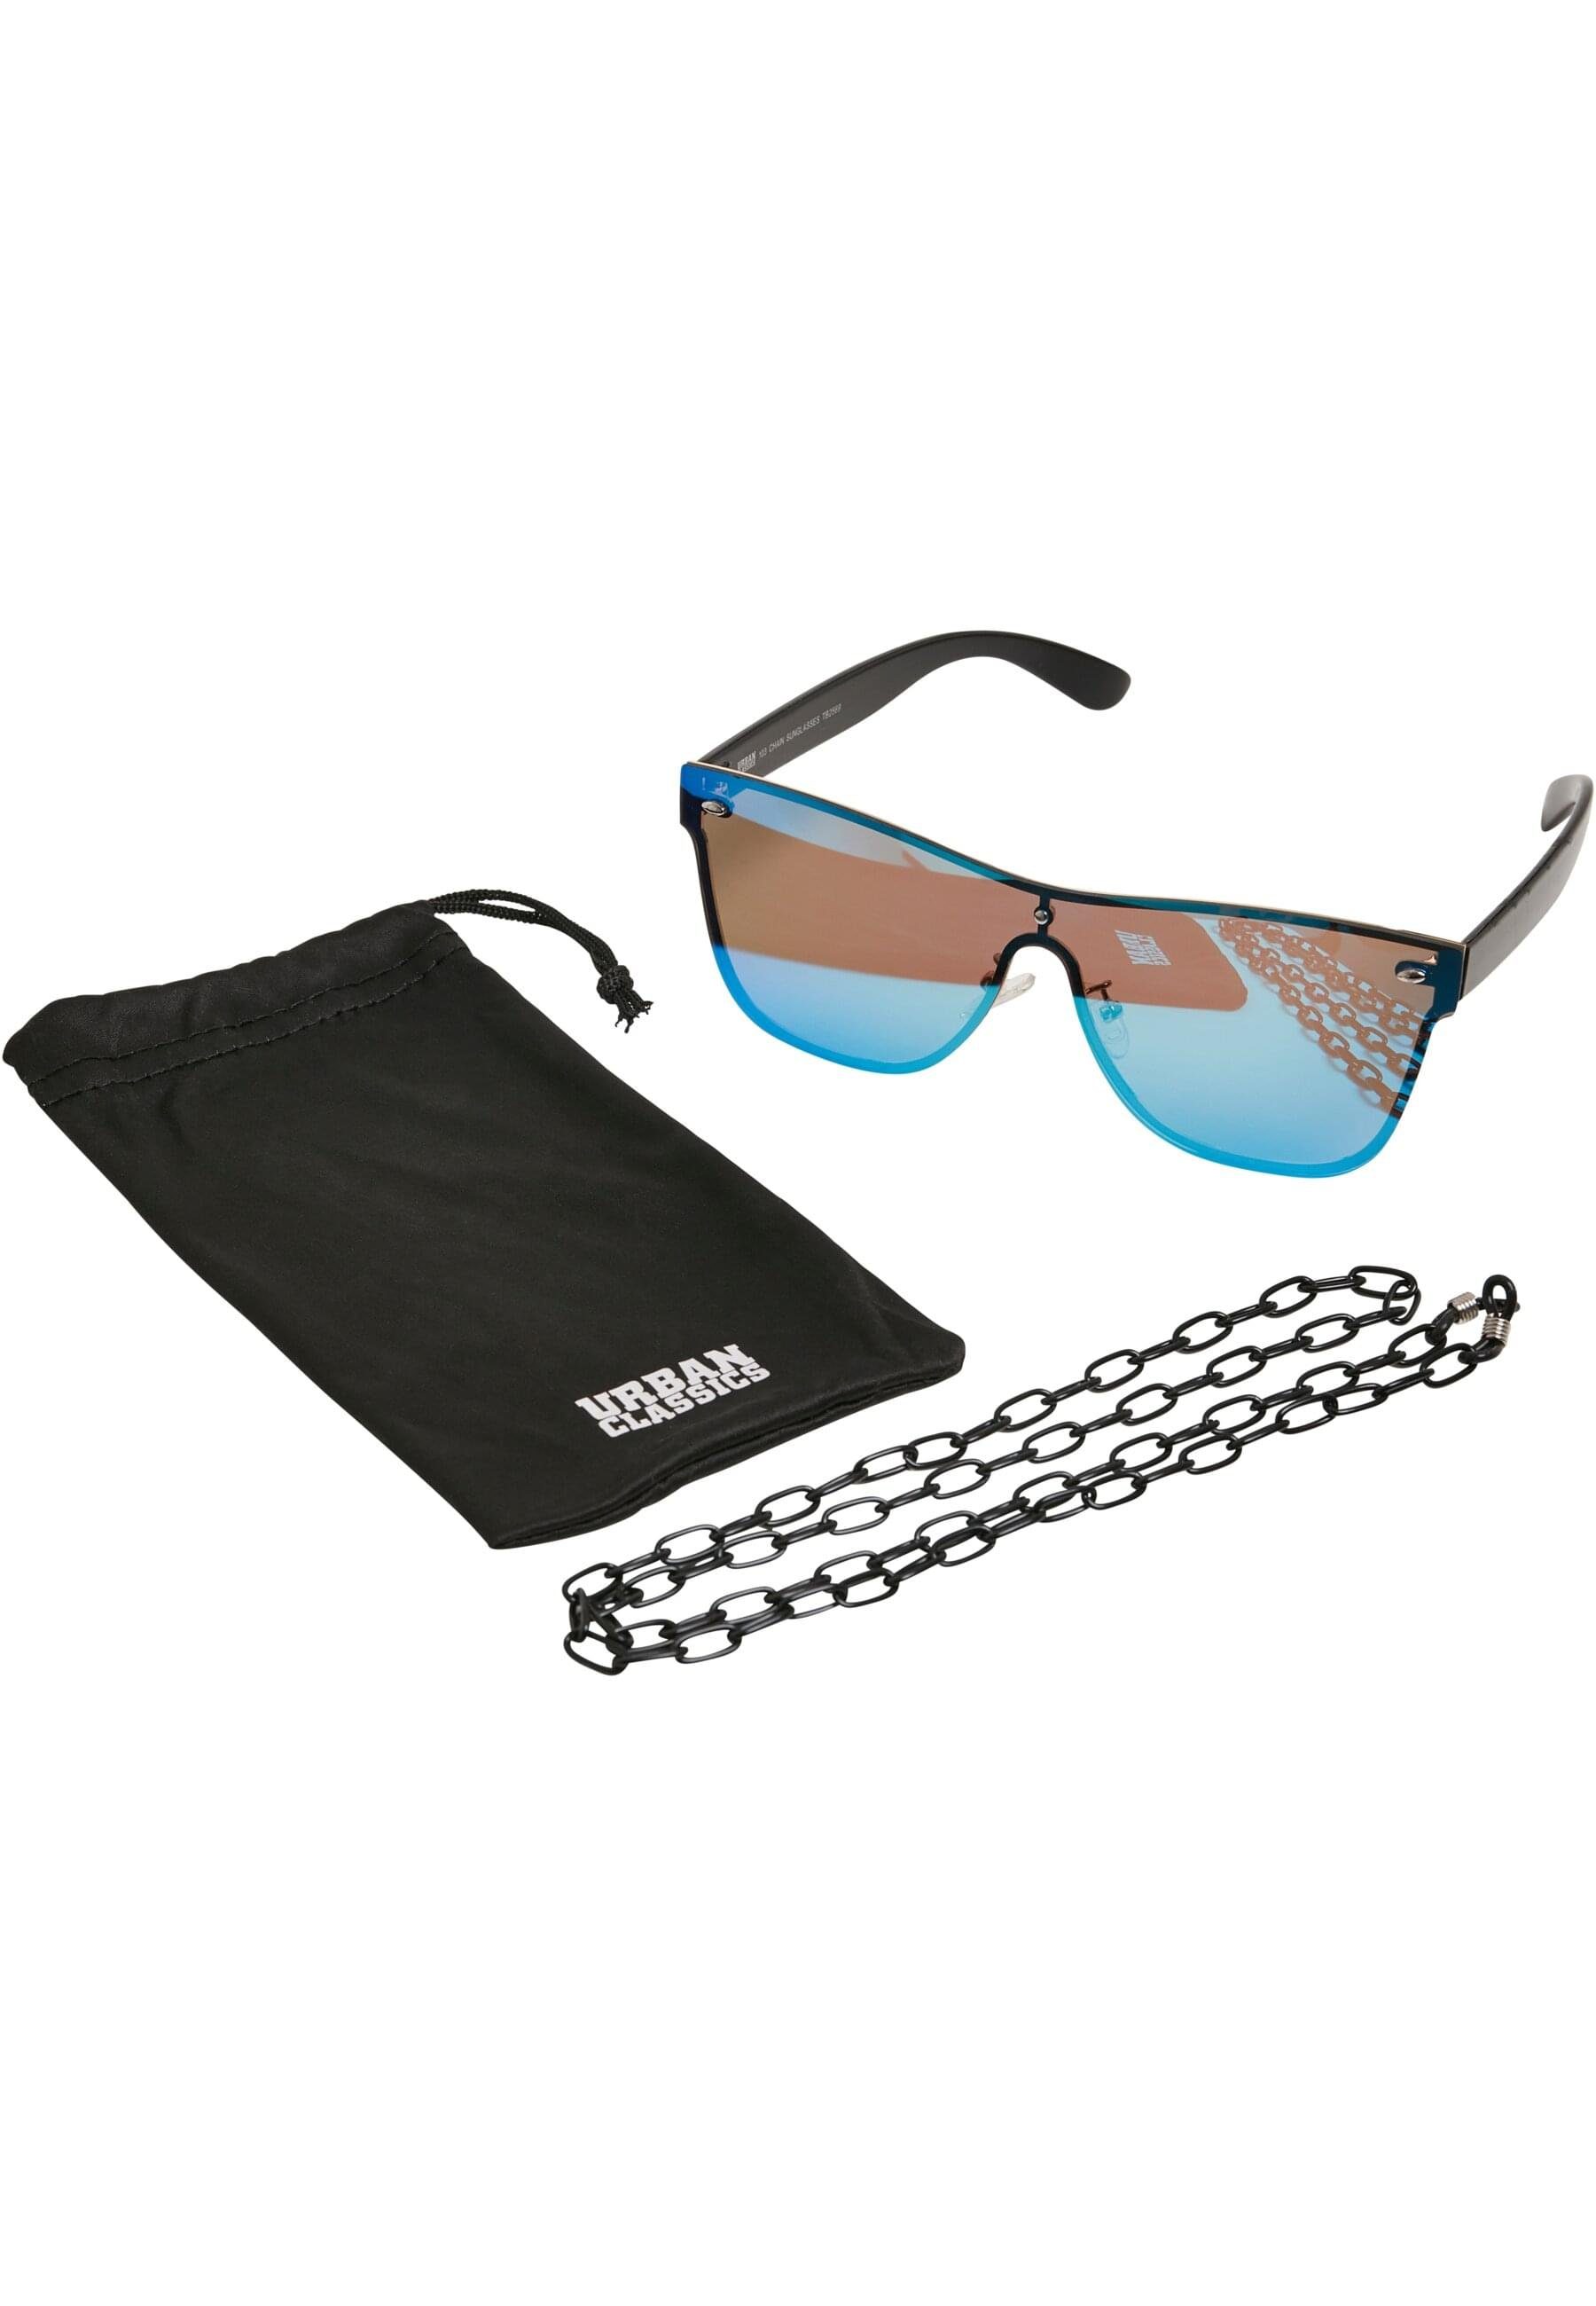 CLASSICS 103 Chain blk/blue URBAN Sonnenbrille Sunglasses Unisex